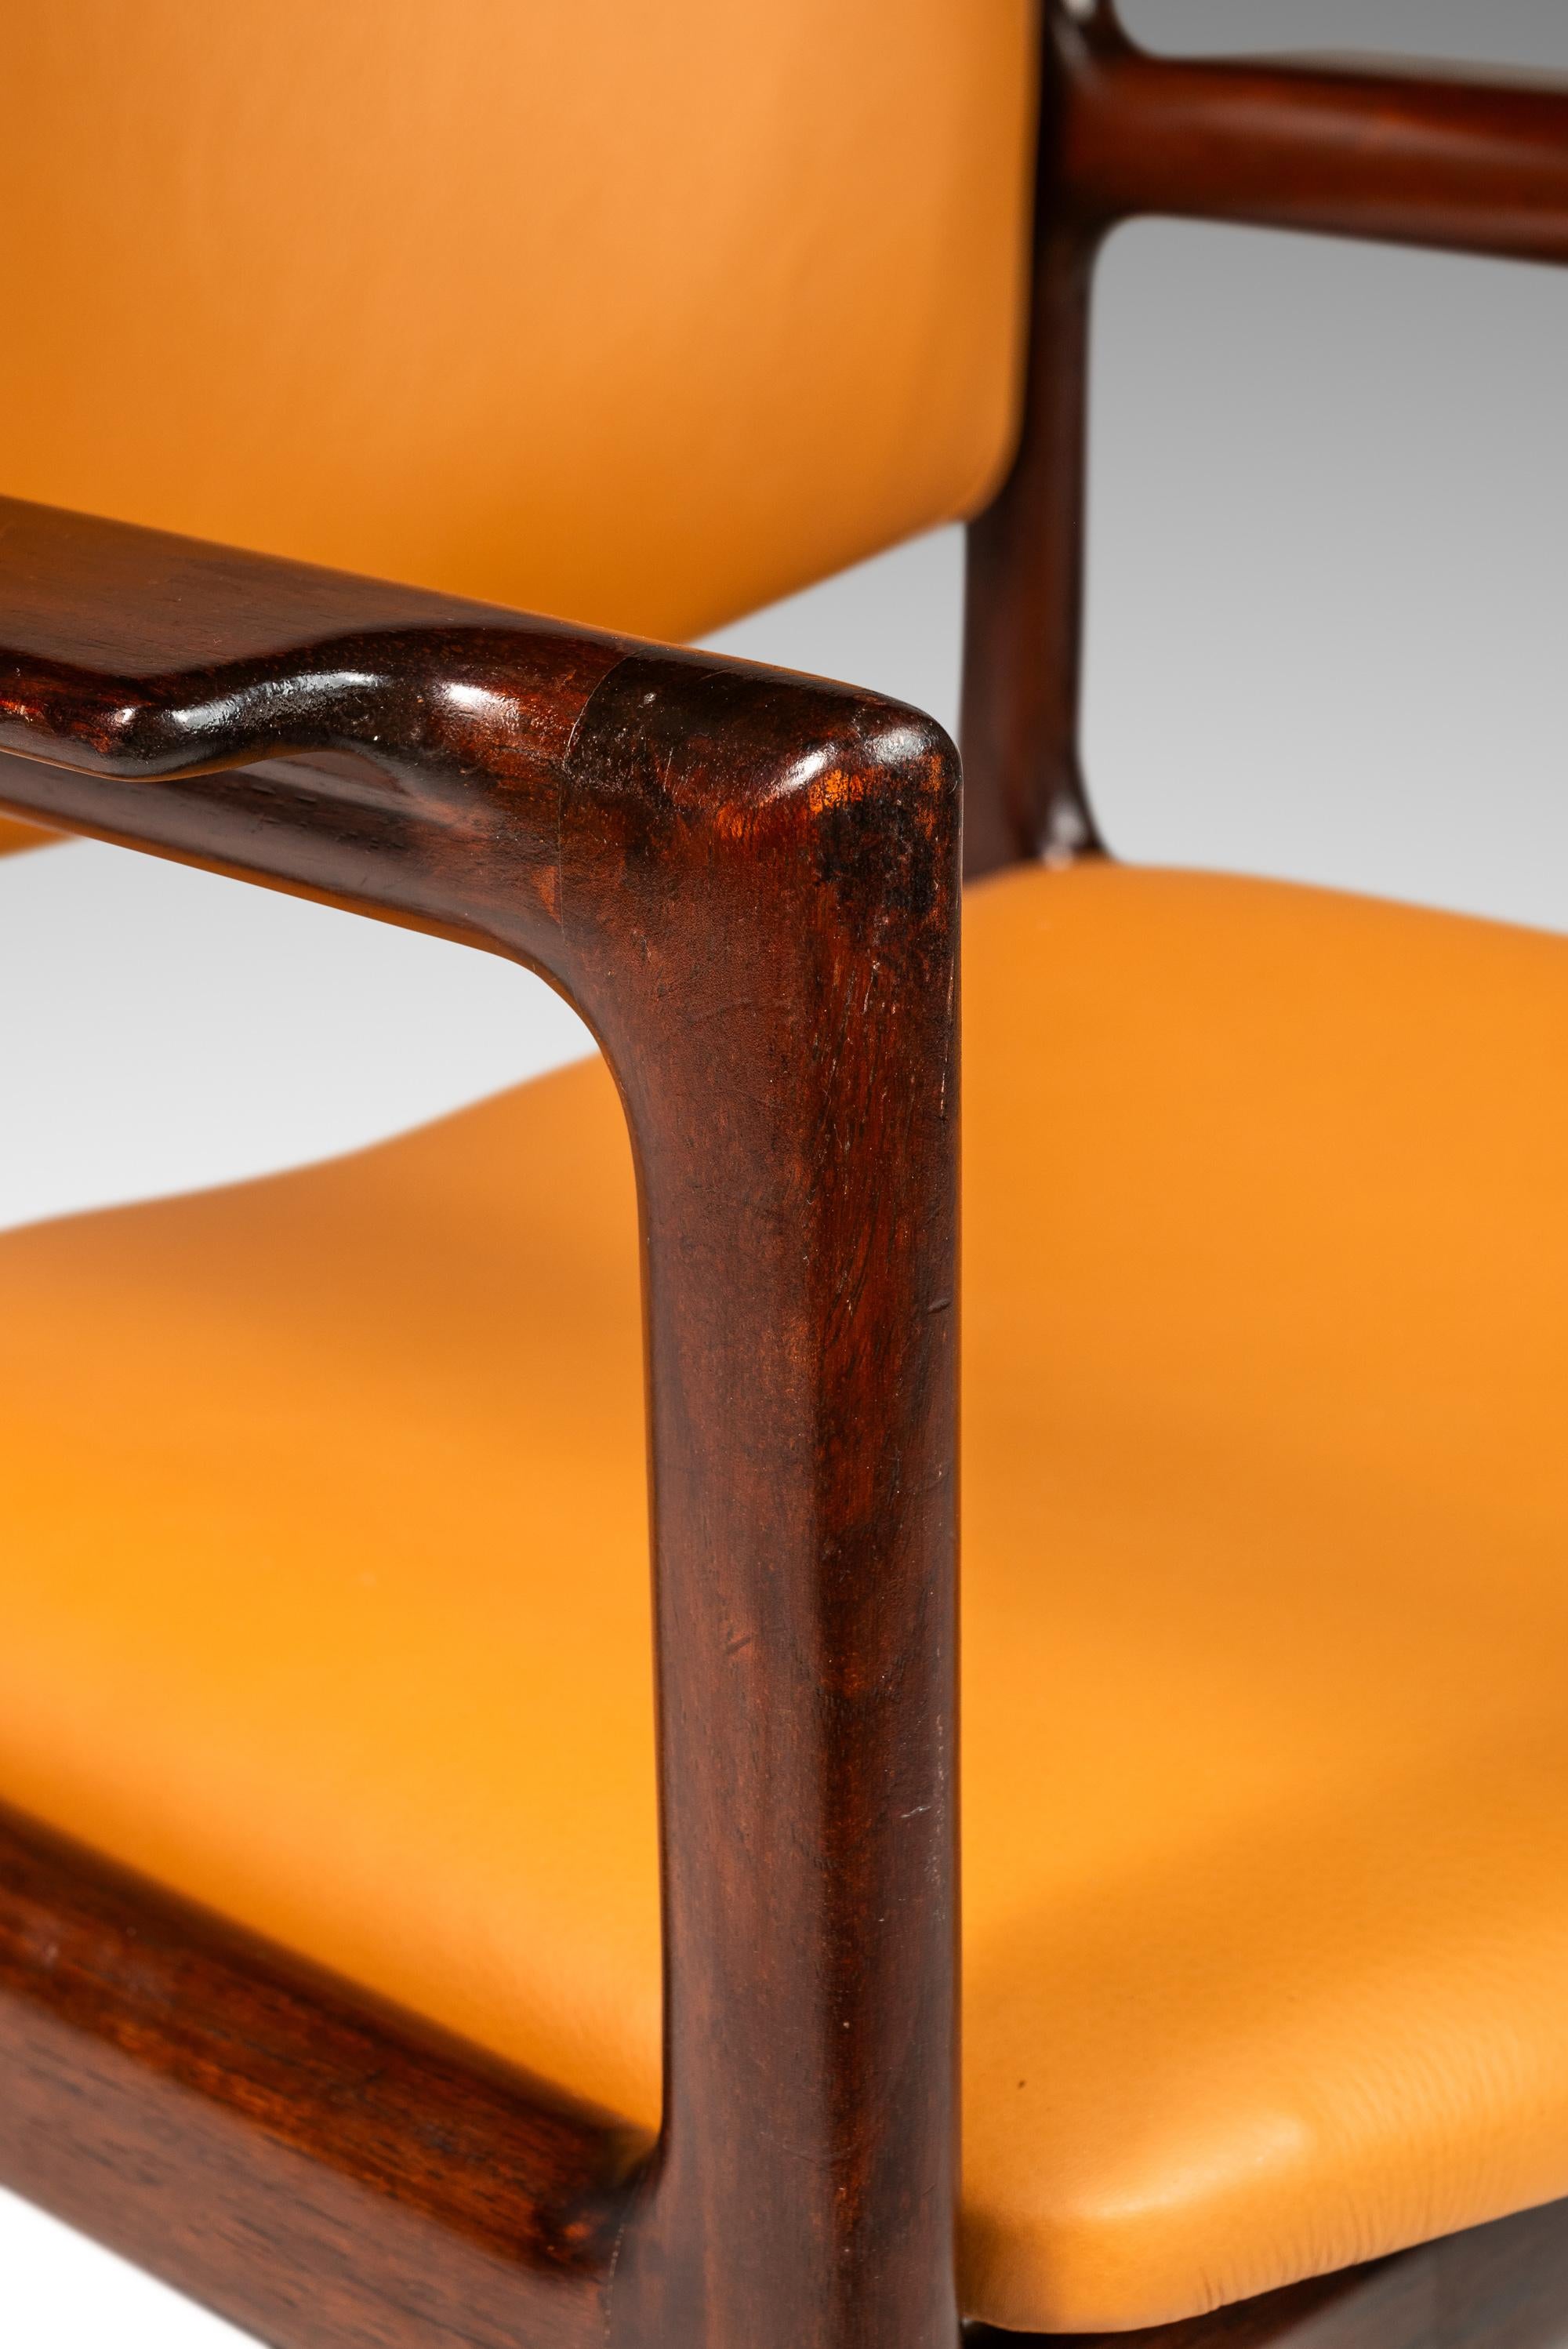 Danish Modern Mahogany & Leather Arm Chair, Danish Overseas Imports, c. 1960's For Sale 7